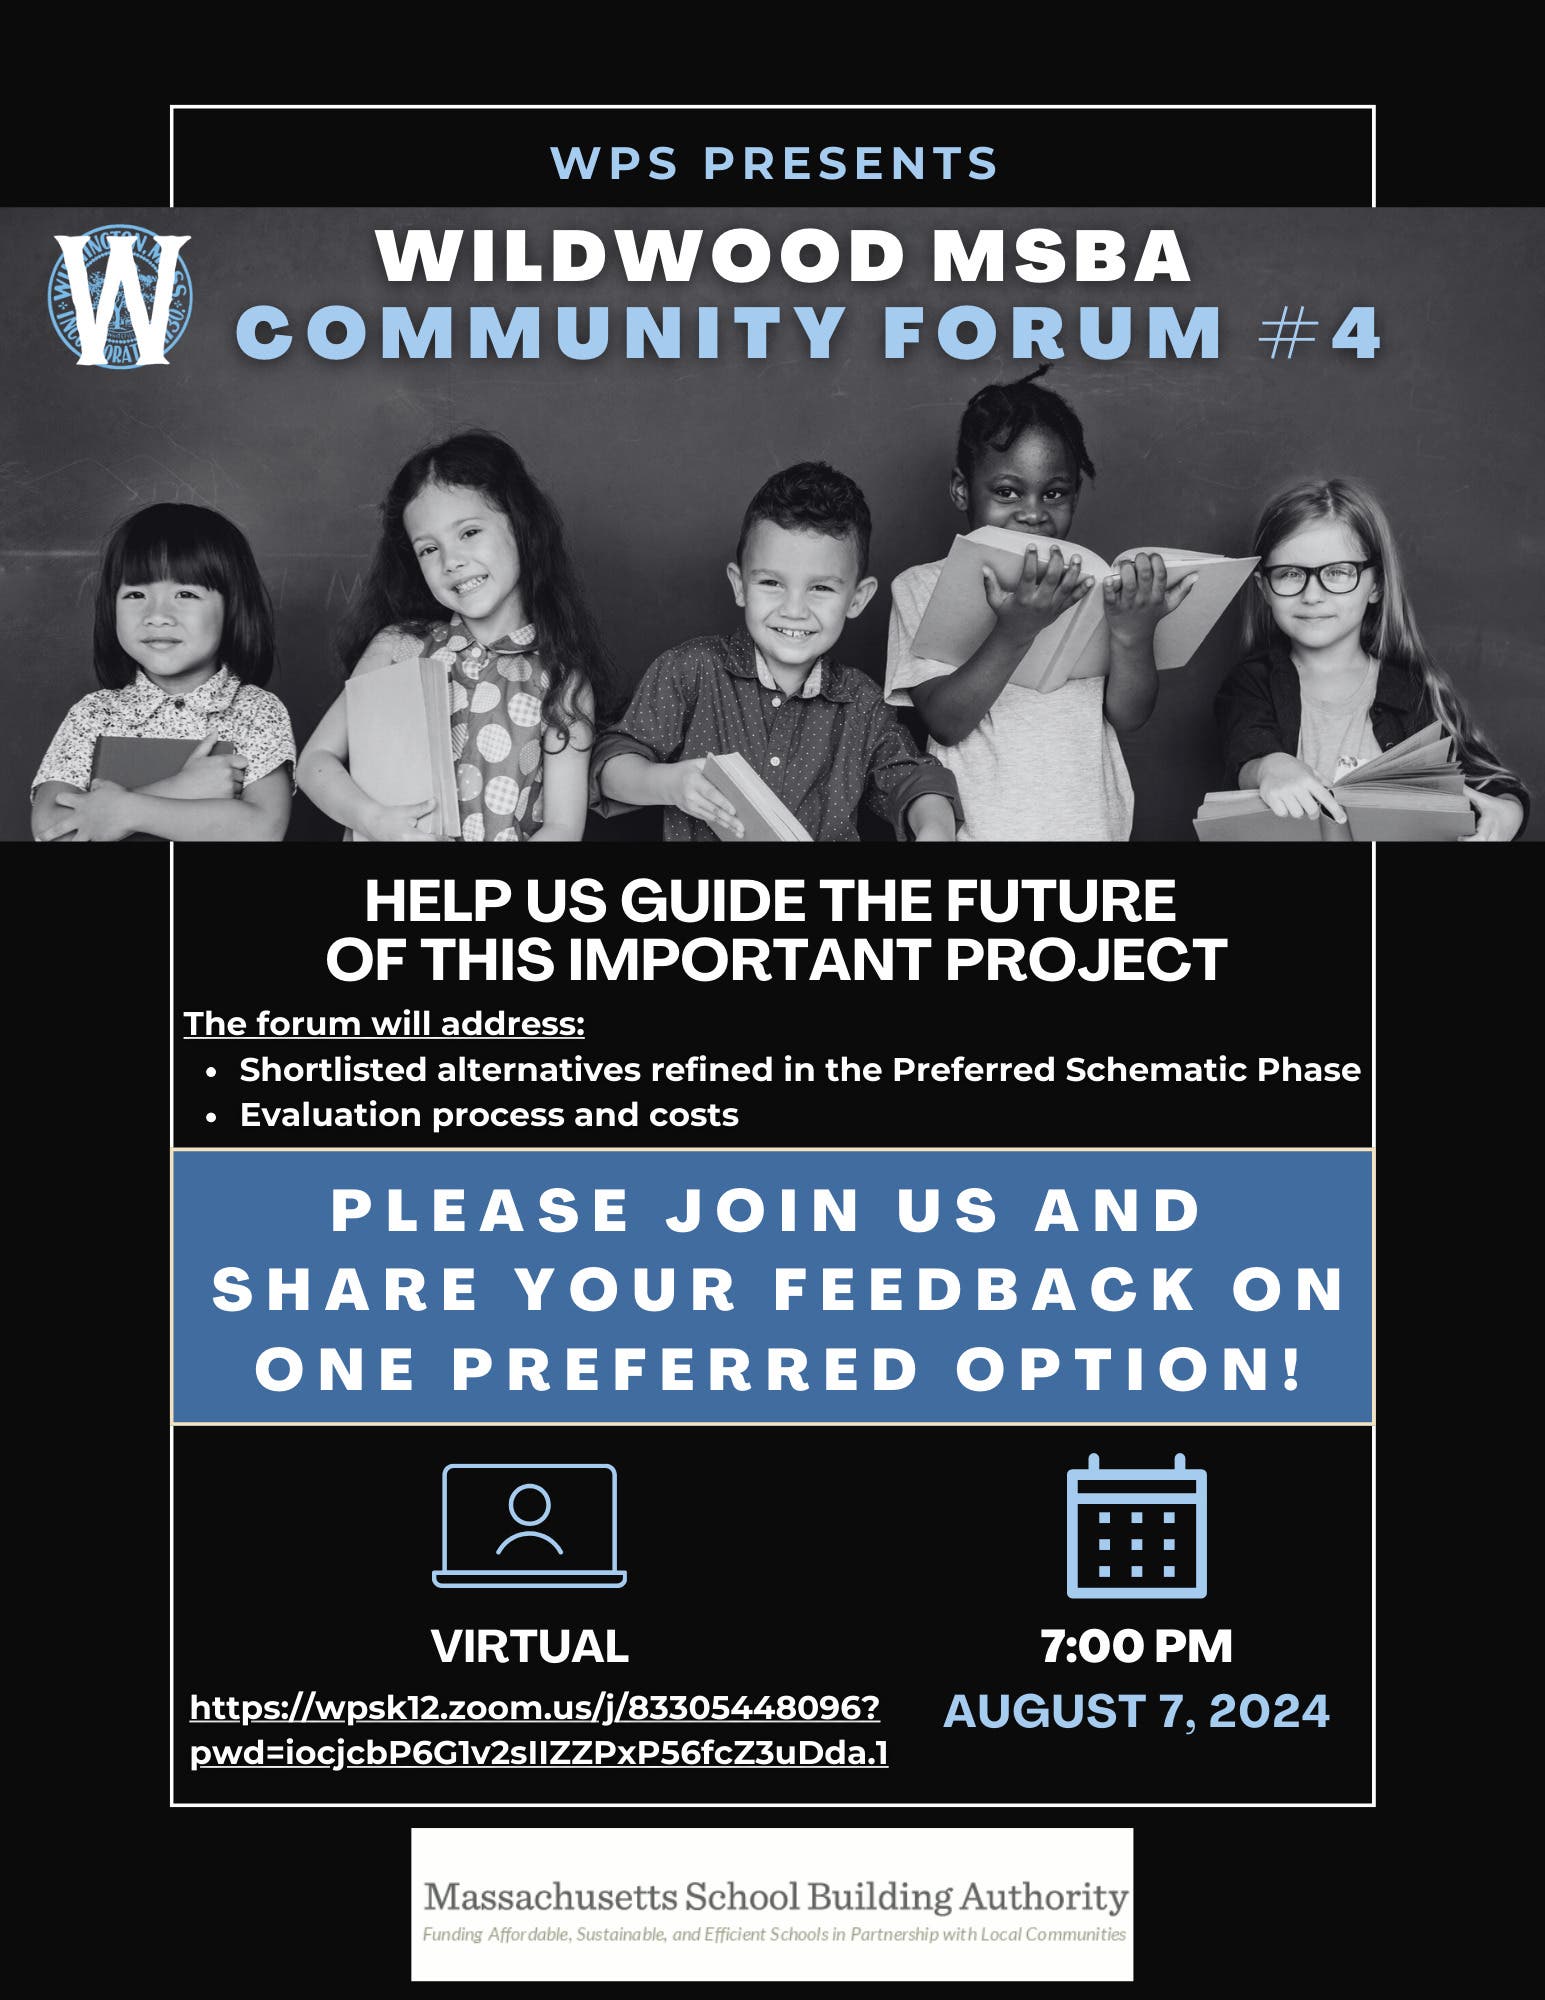 Wildwood MSBA Community Forum #4